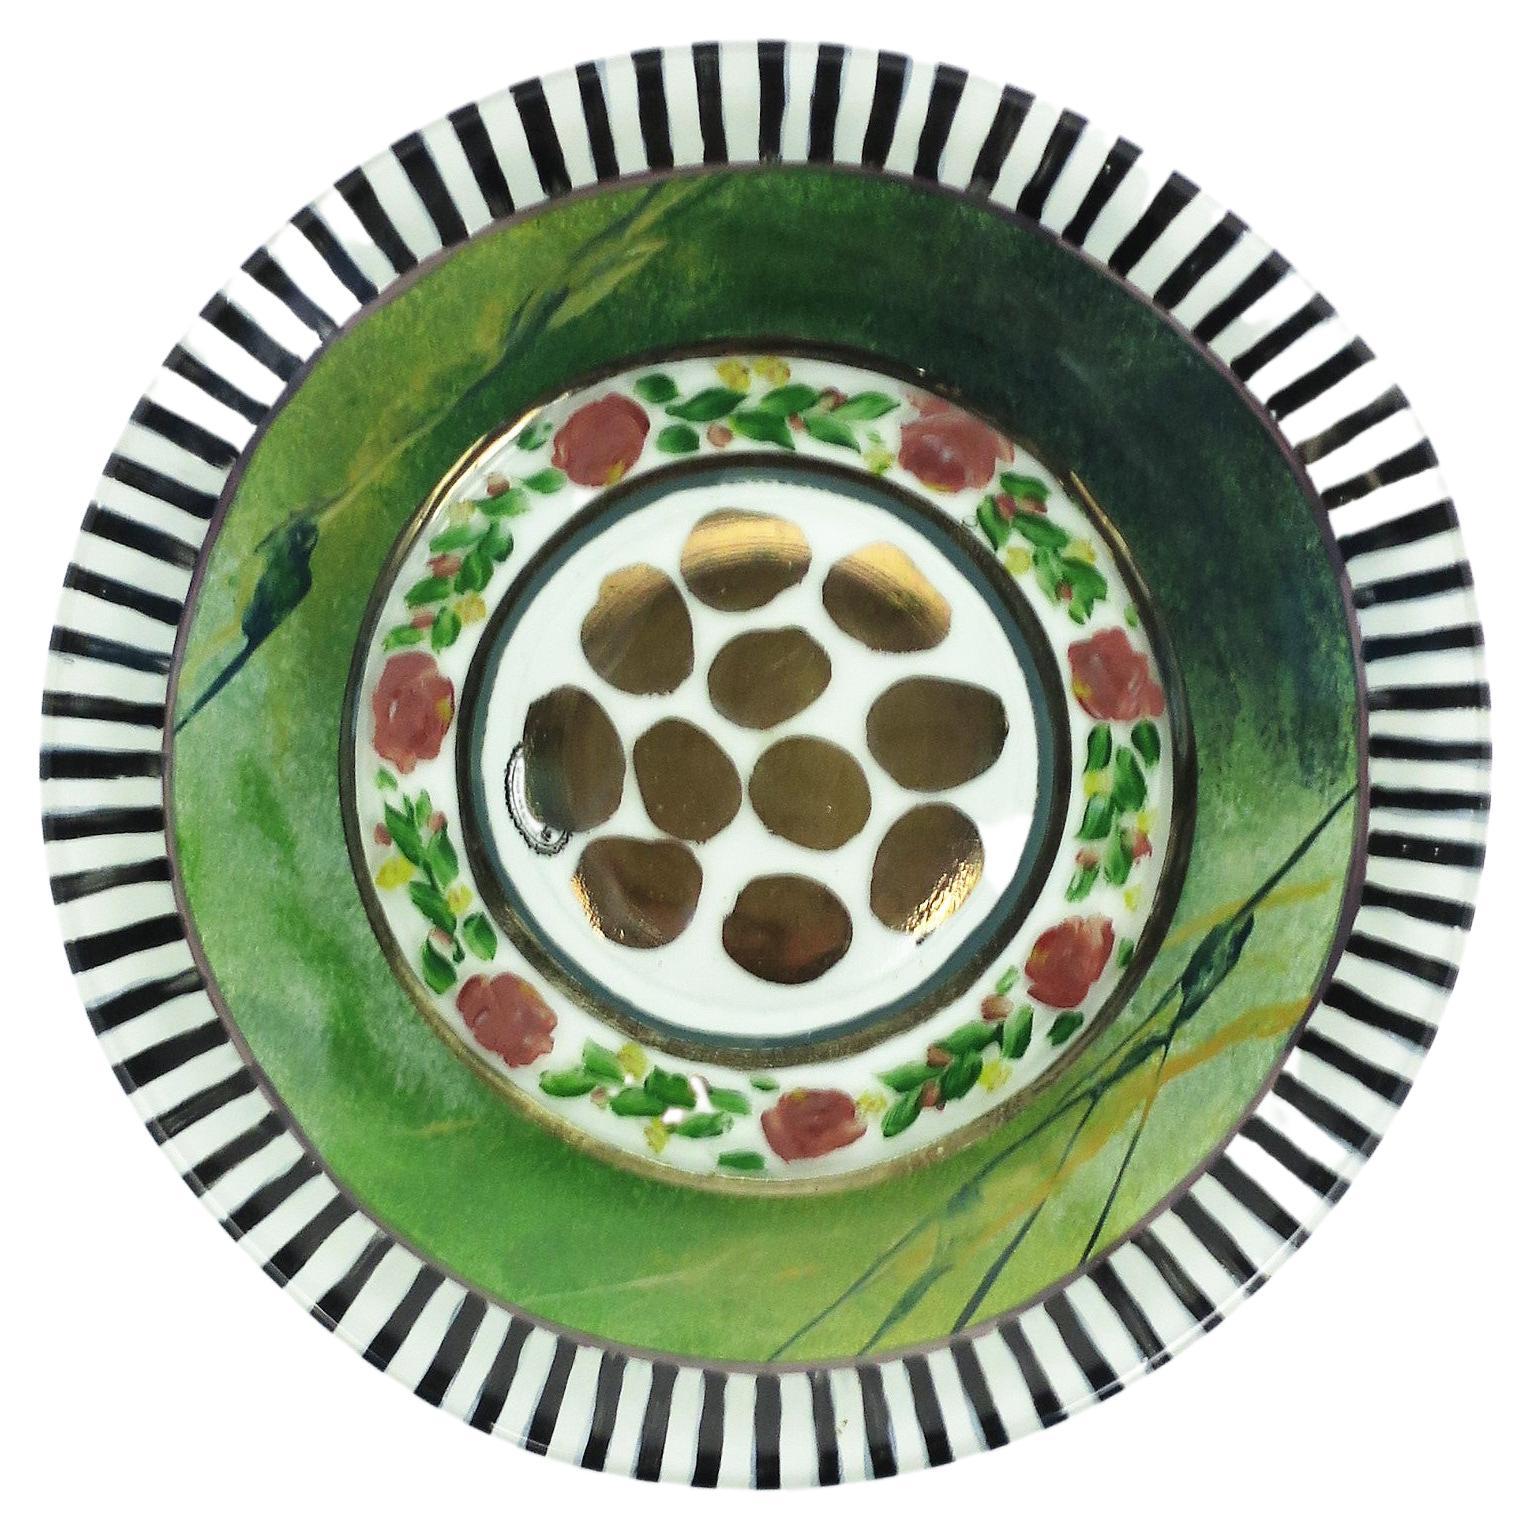 Mackenzie-Childs Black and White Plate or Dish, 1990s